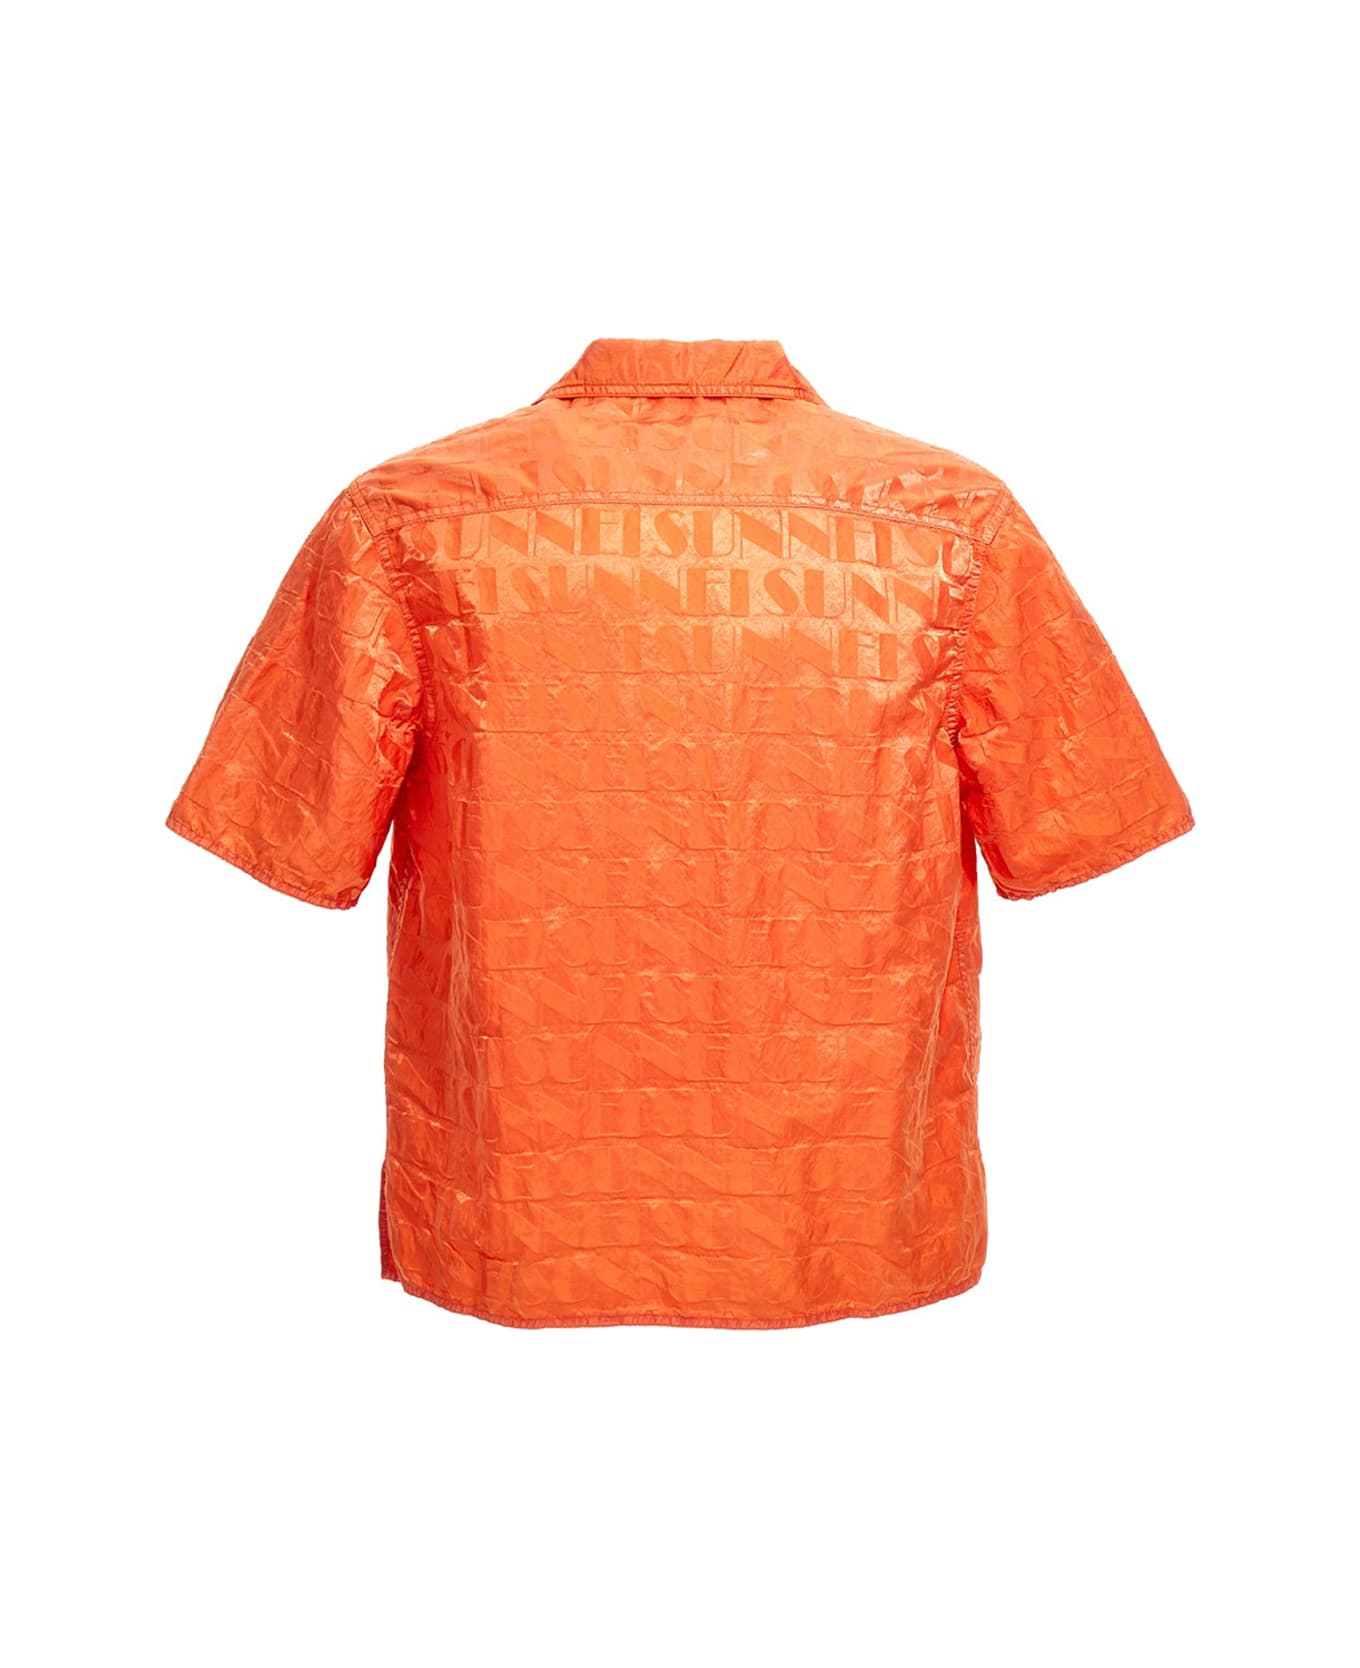 Sunnei Logo Shirt - Orange シャツ